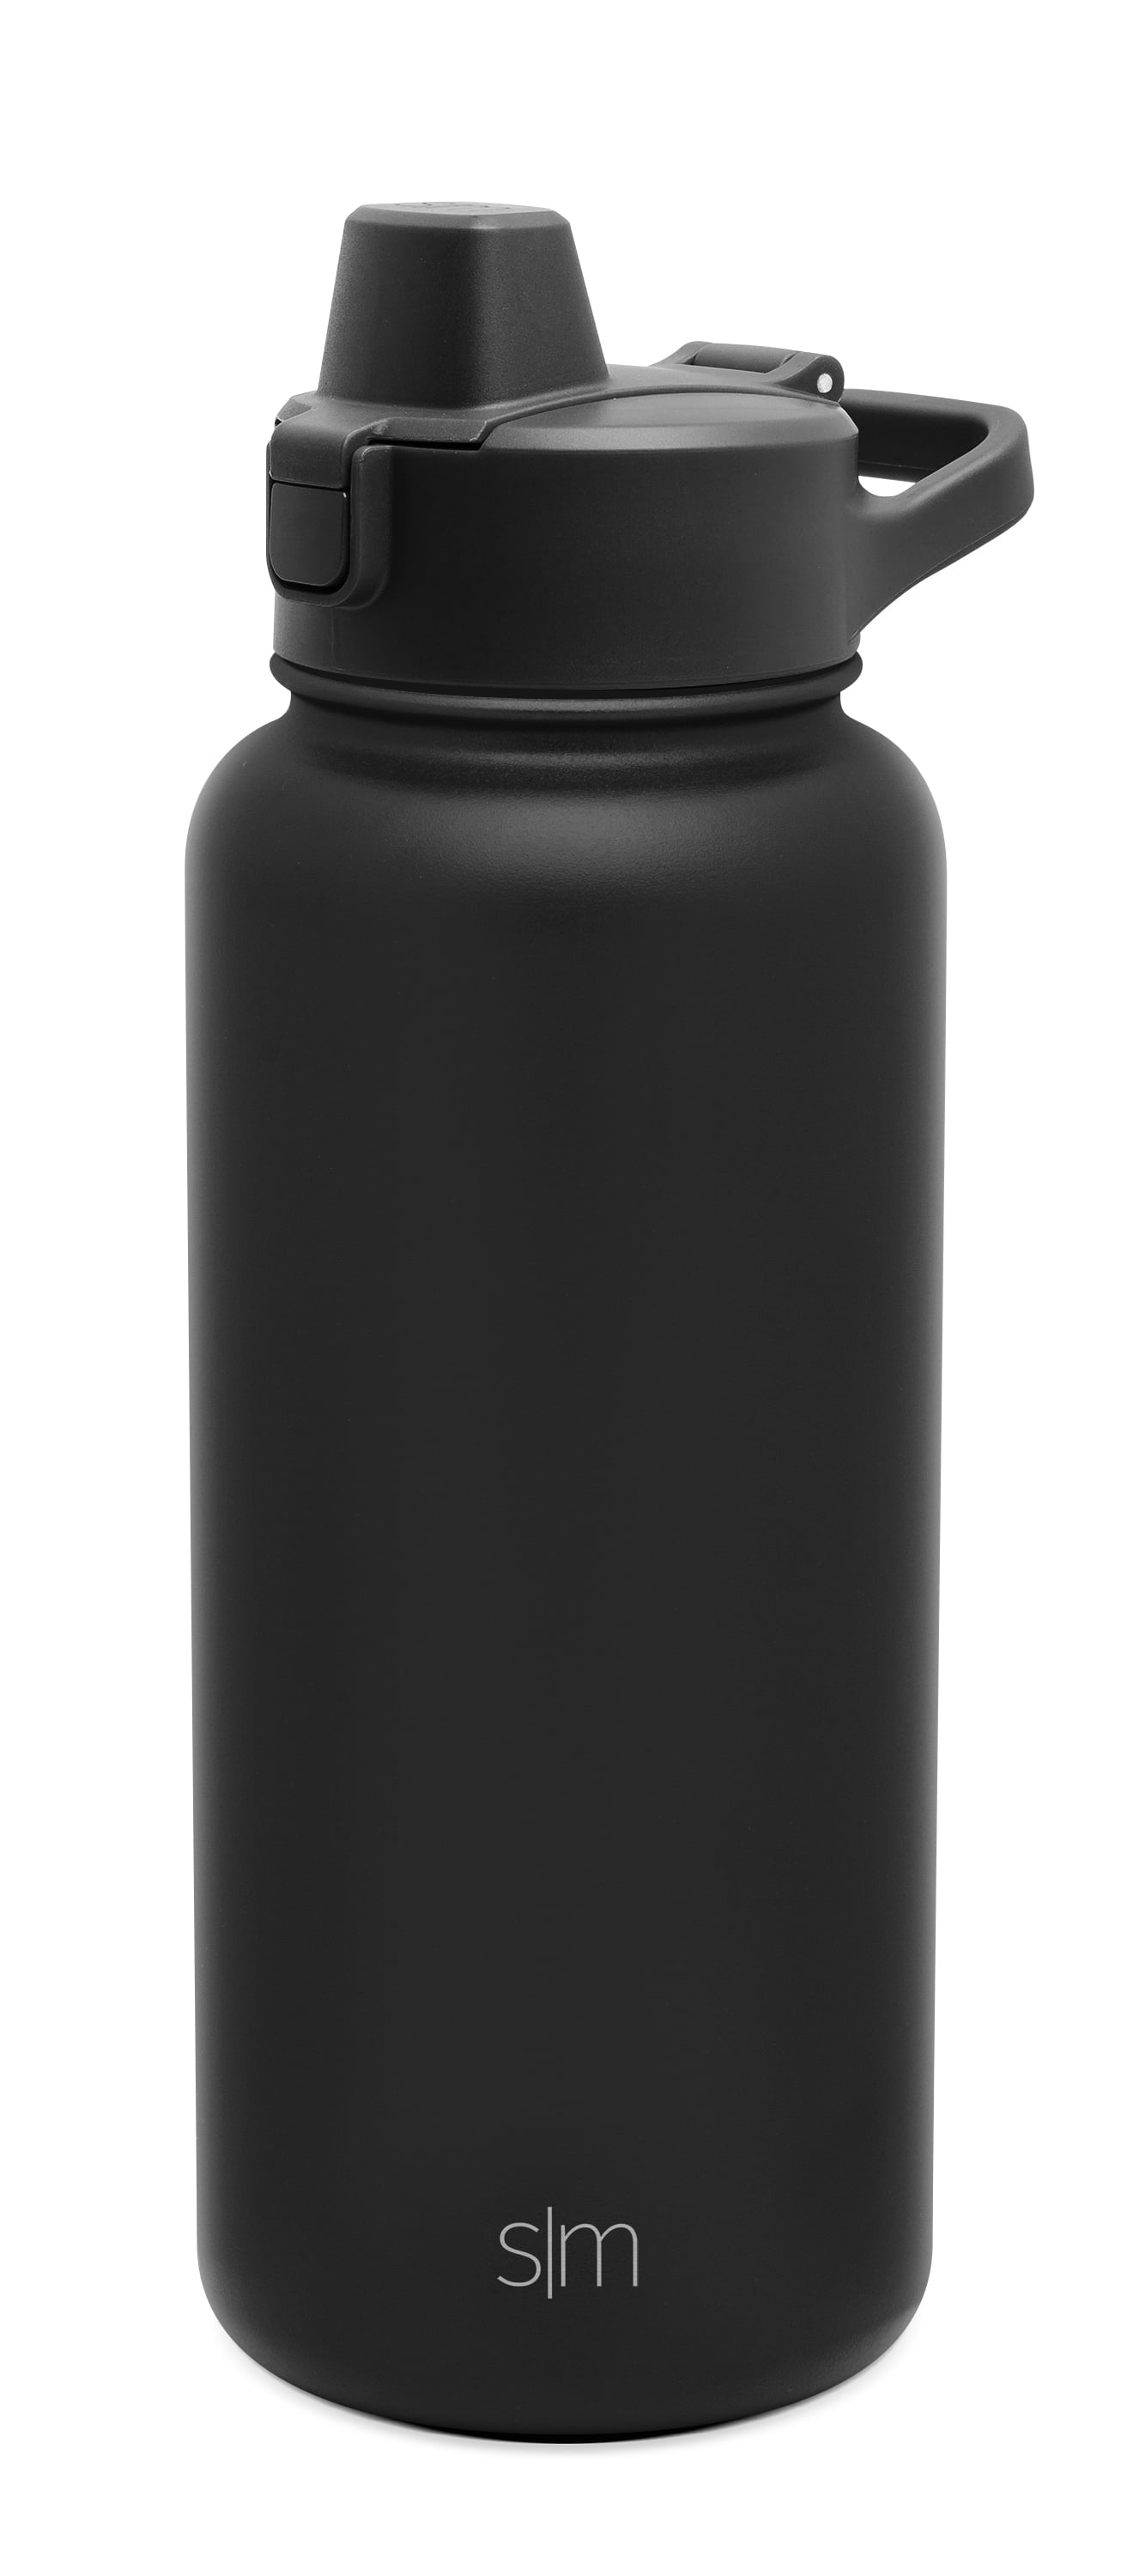  Lug Stainless Bottle - 28 oz. 156585